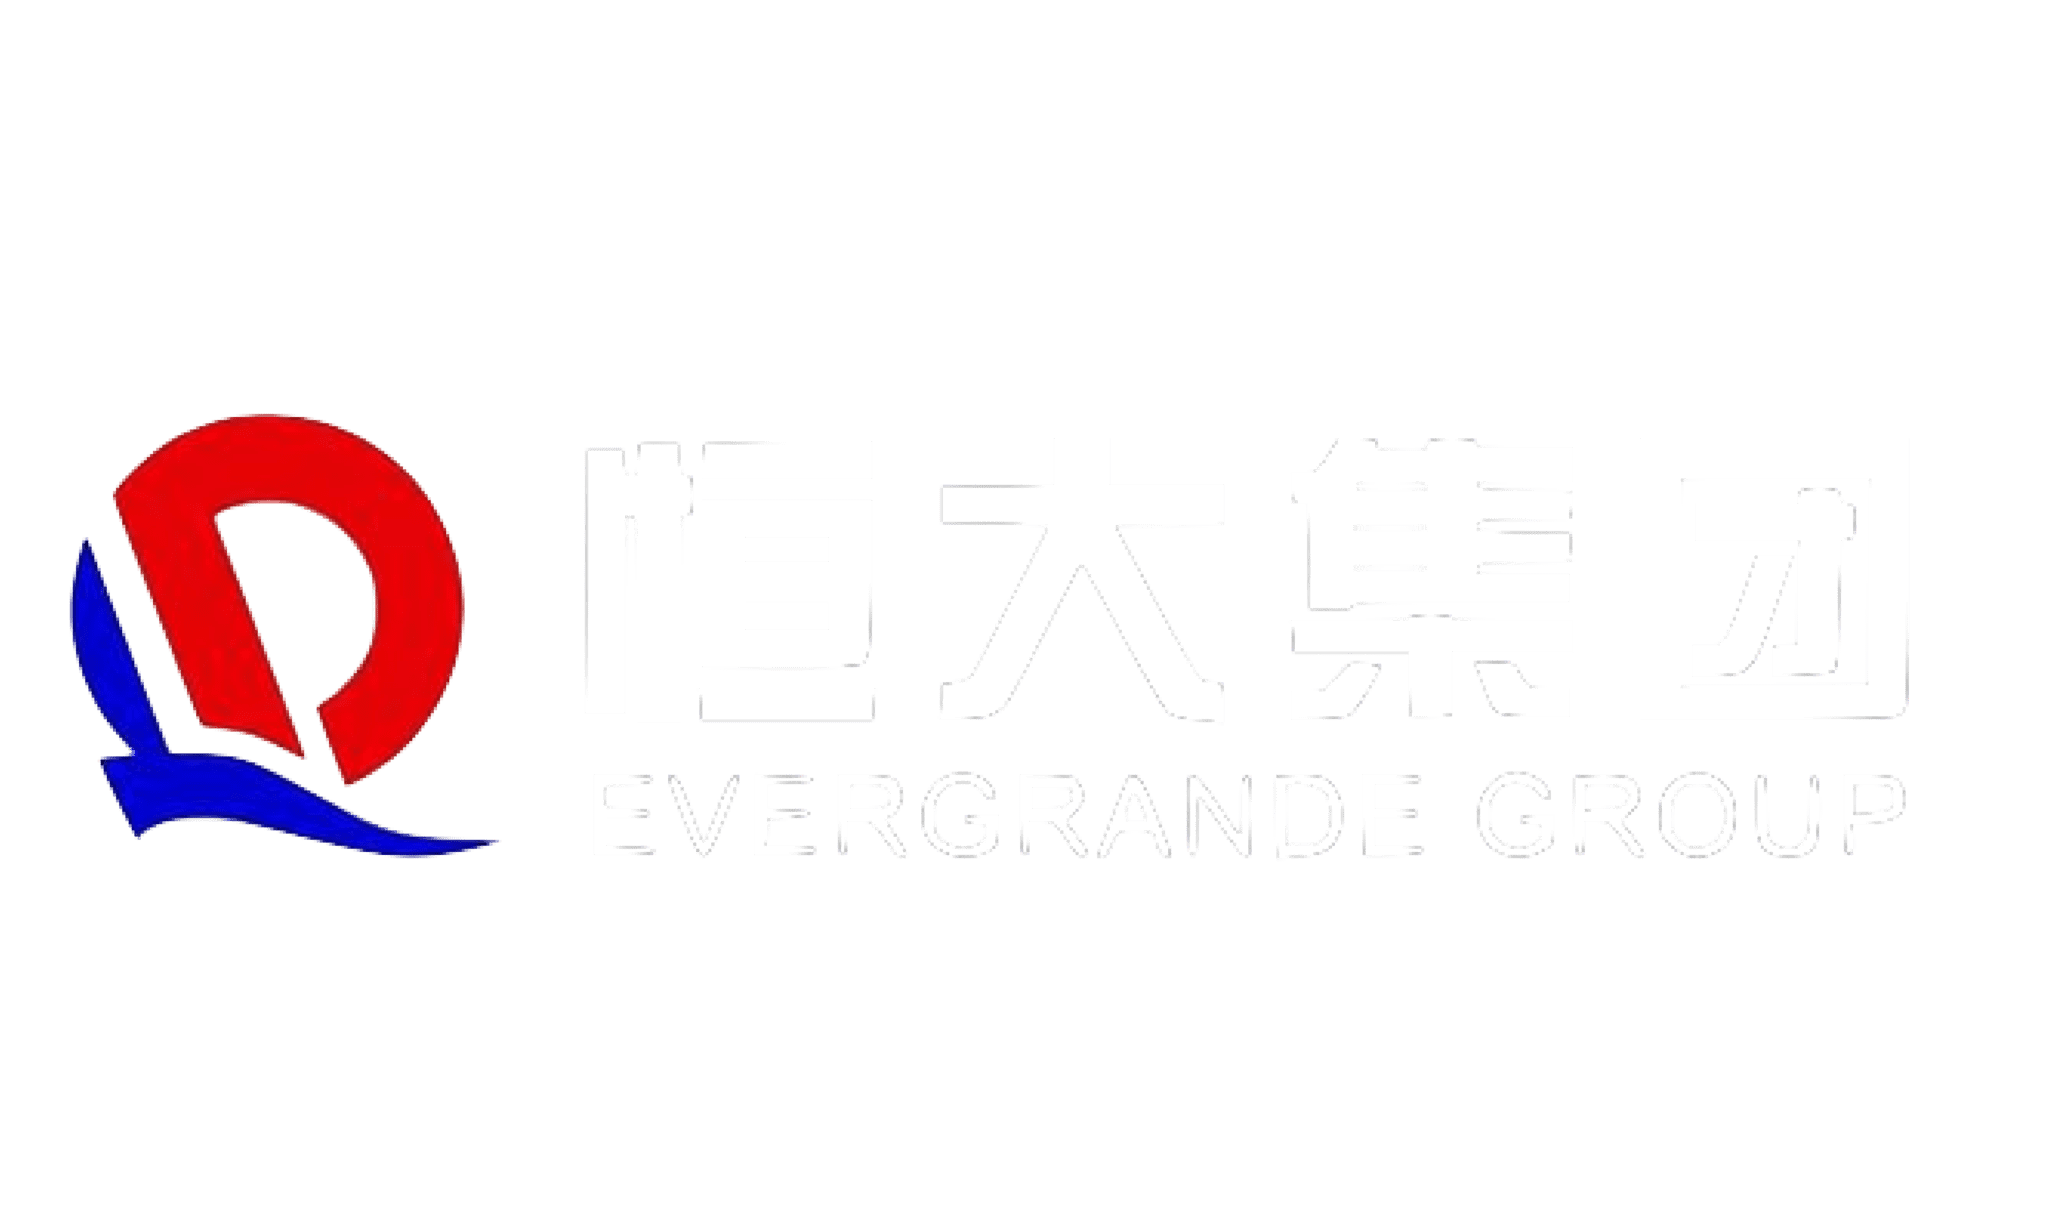 The evergrande group logo